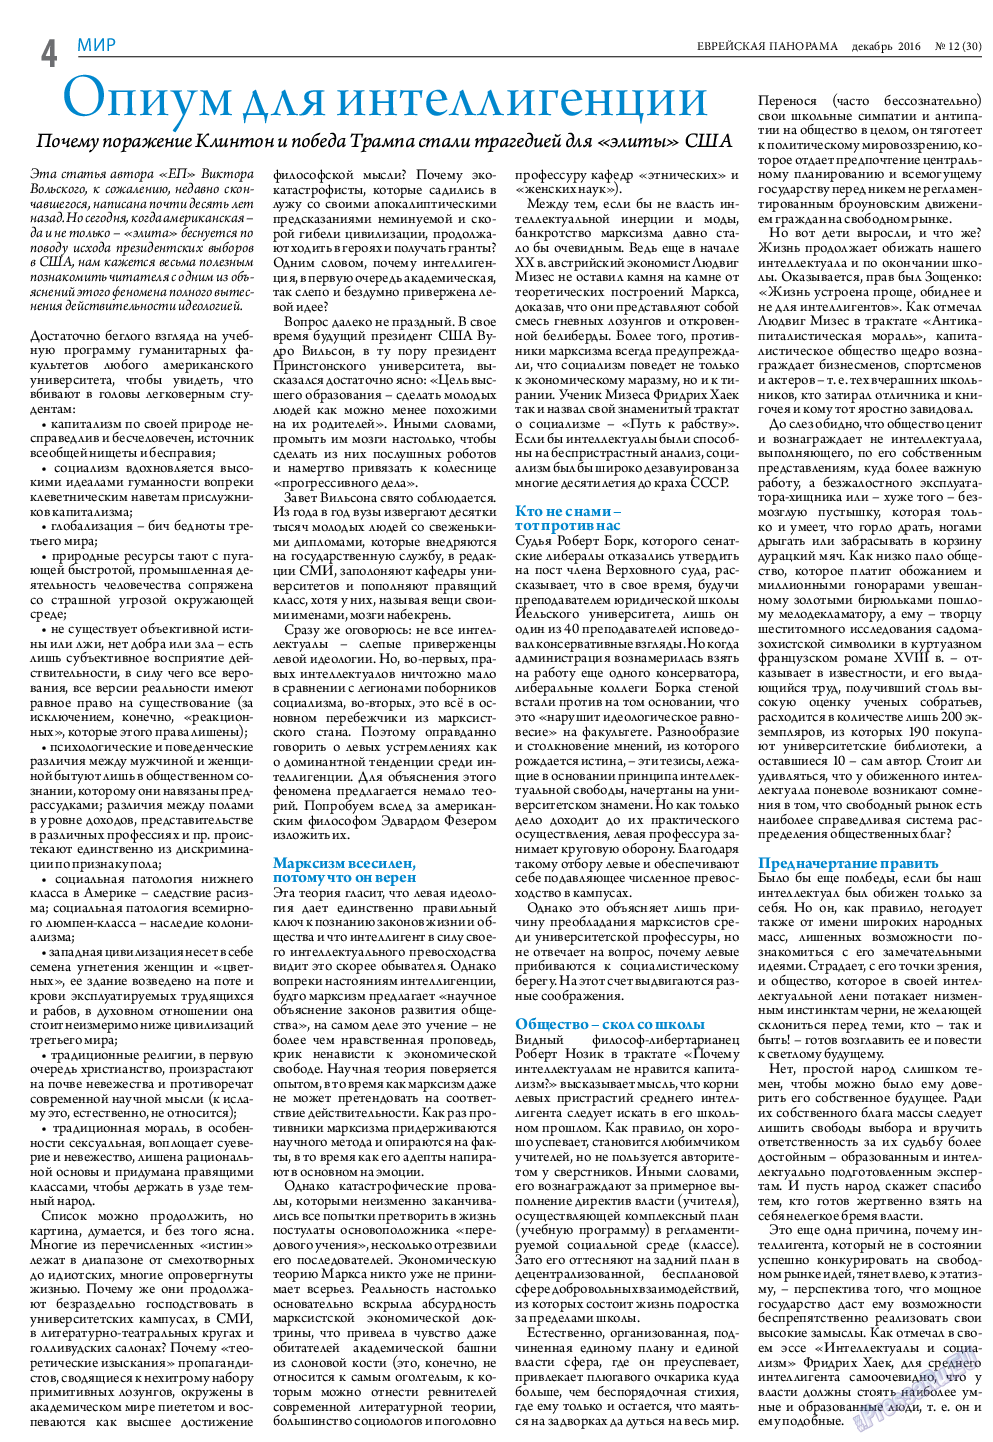 Еврейская панорама, газета. 2016 №12 стр.4